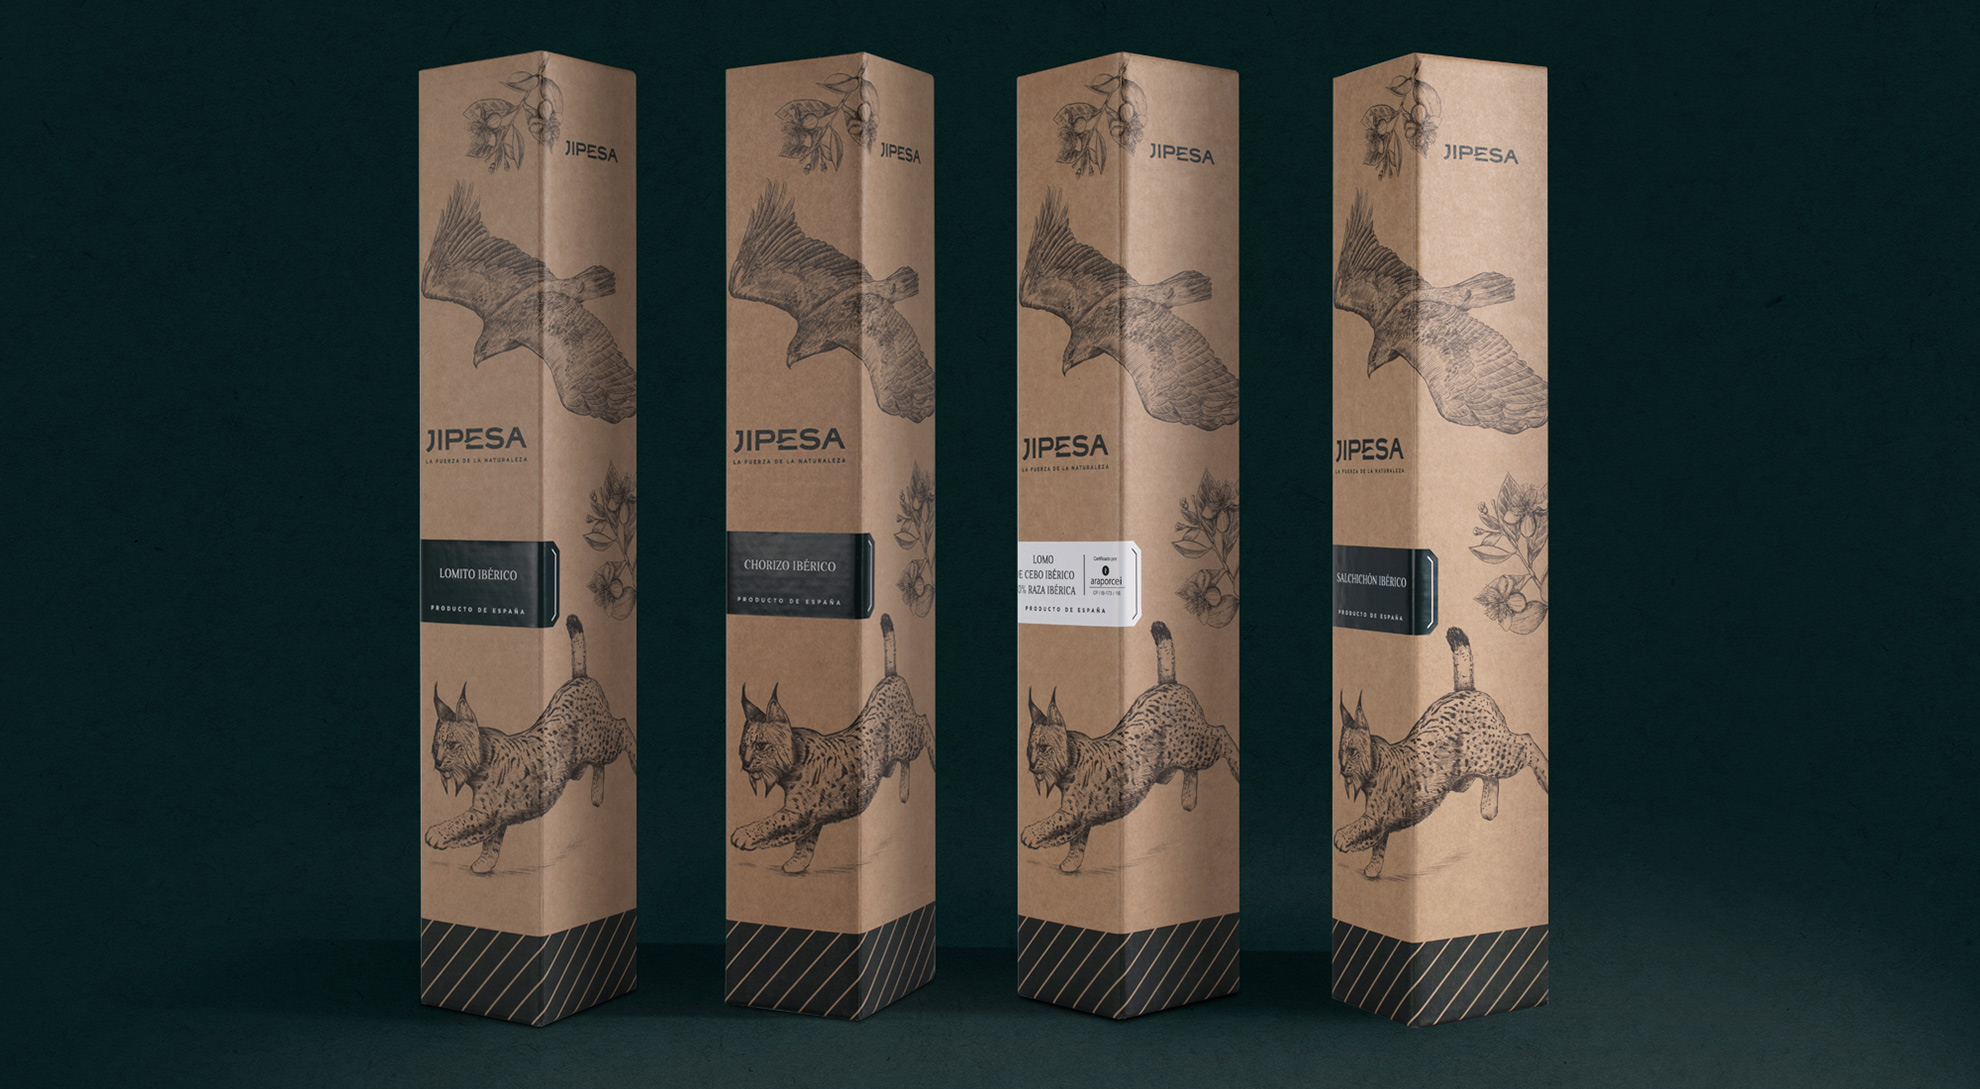 Jipesa packaging sostenible para jamón